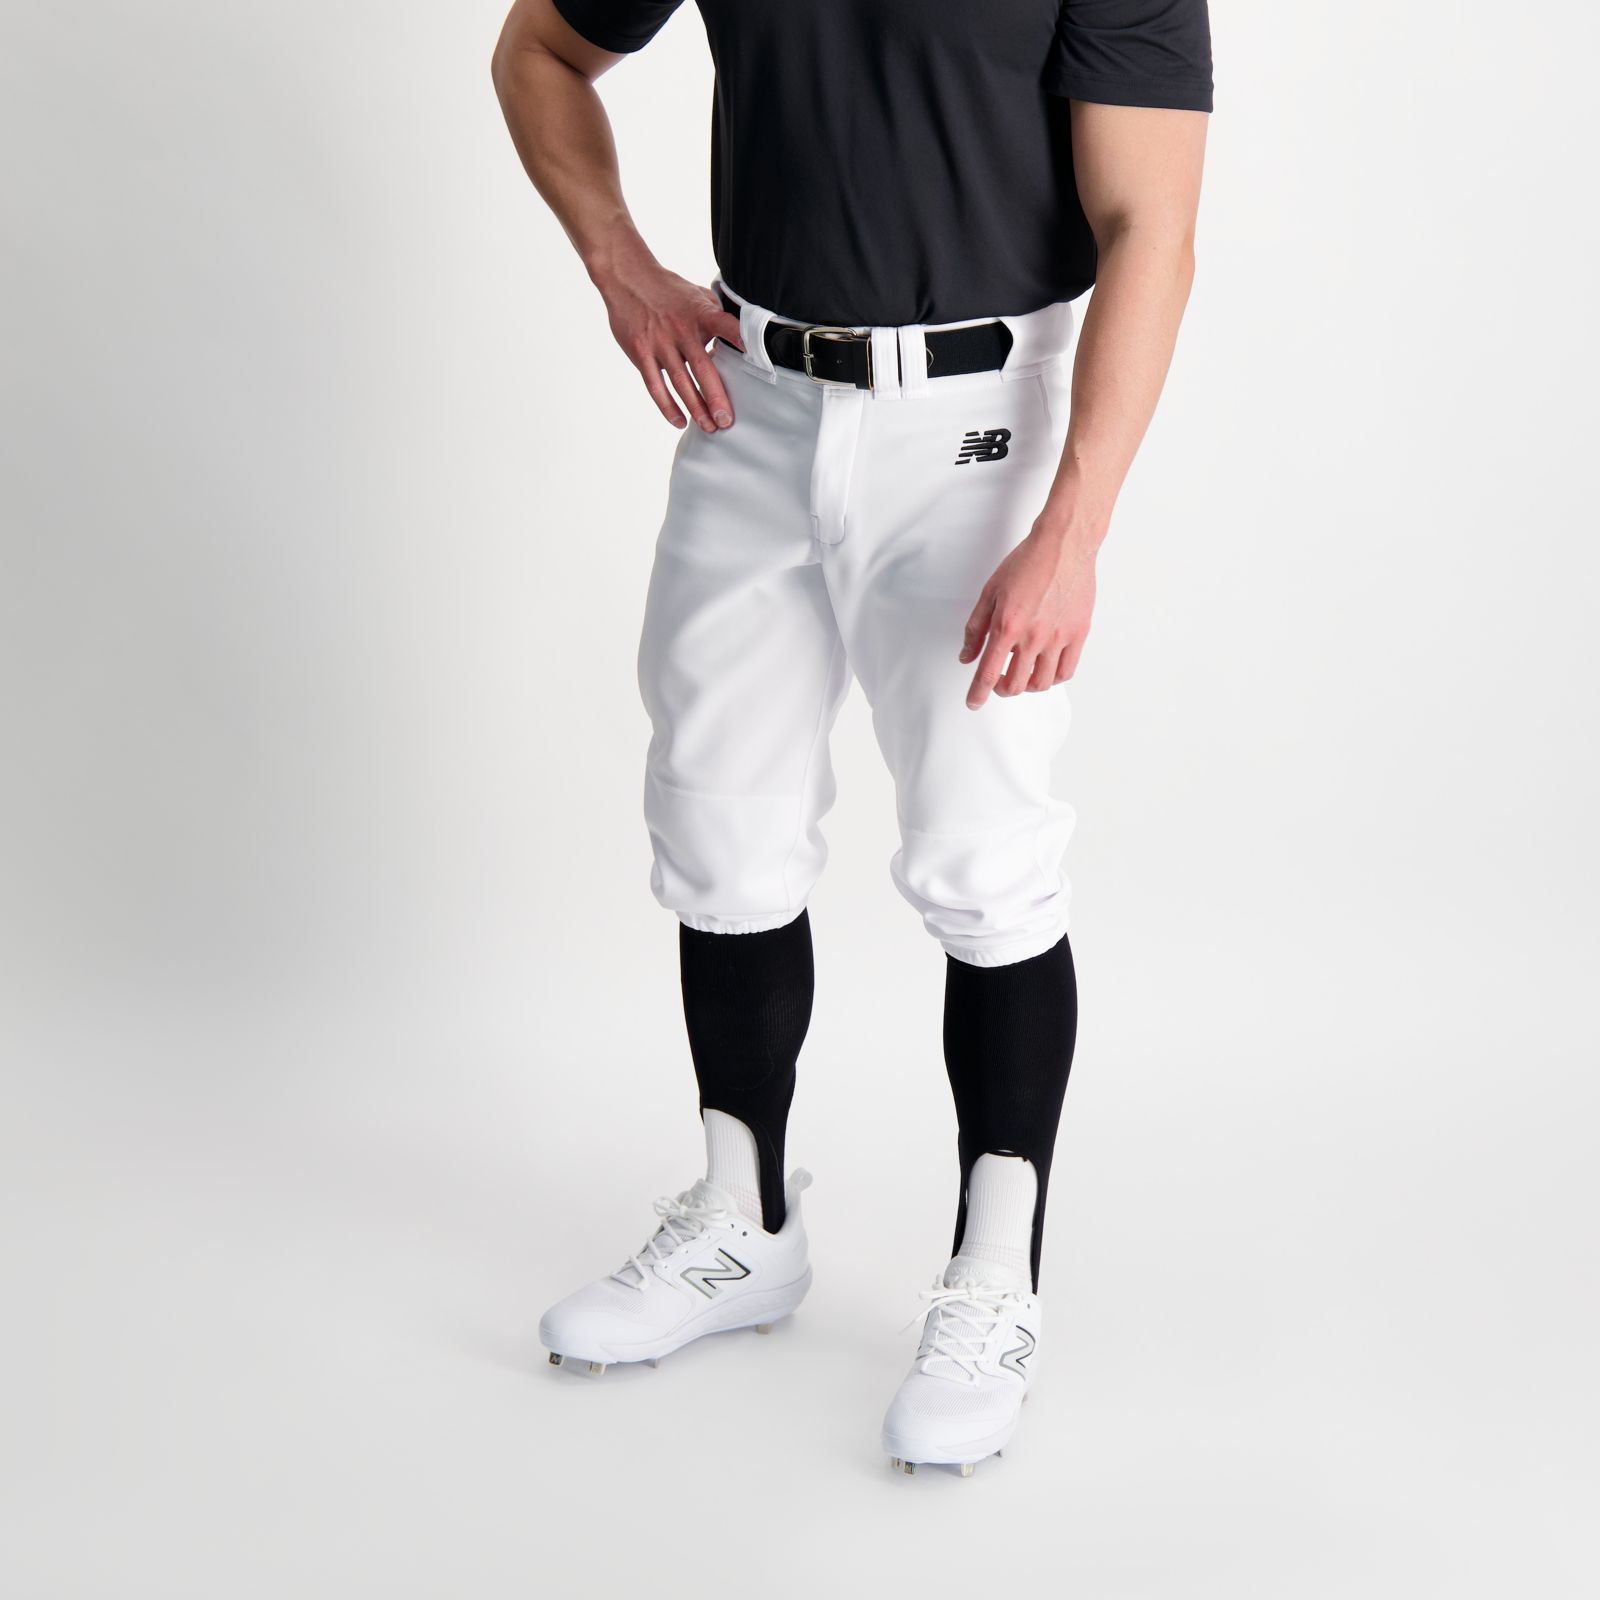 New Balance Men's Solid Knicker Short Baseball Pants BMP236